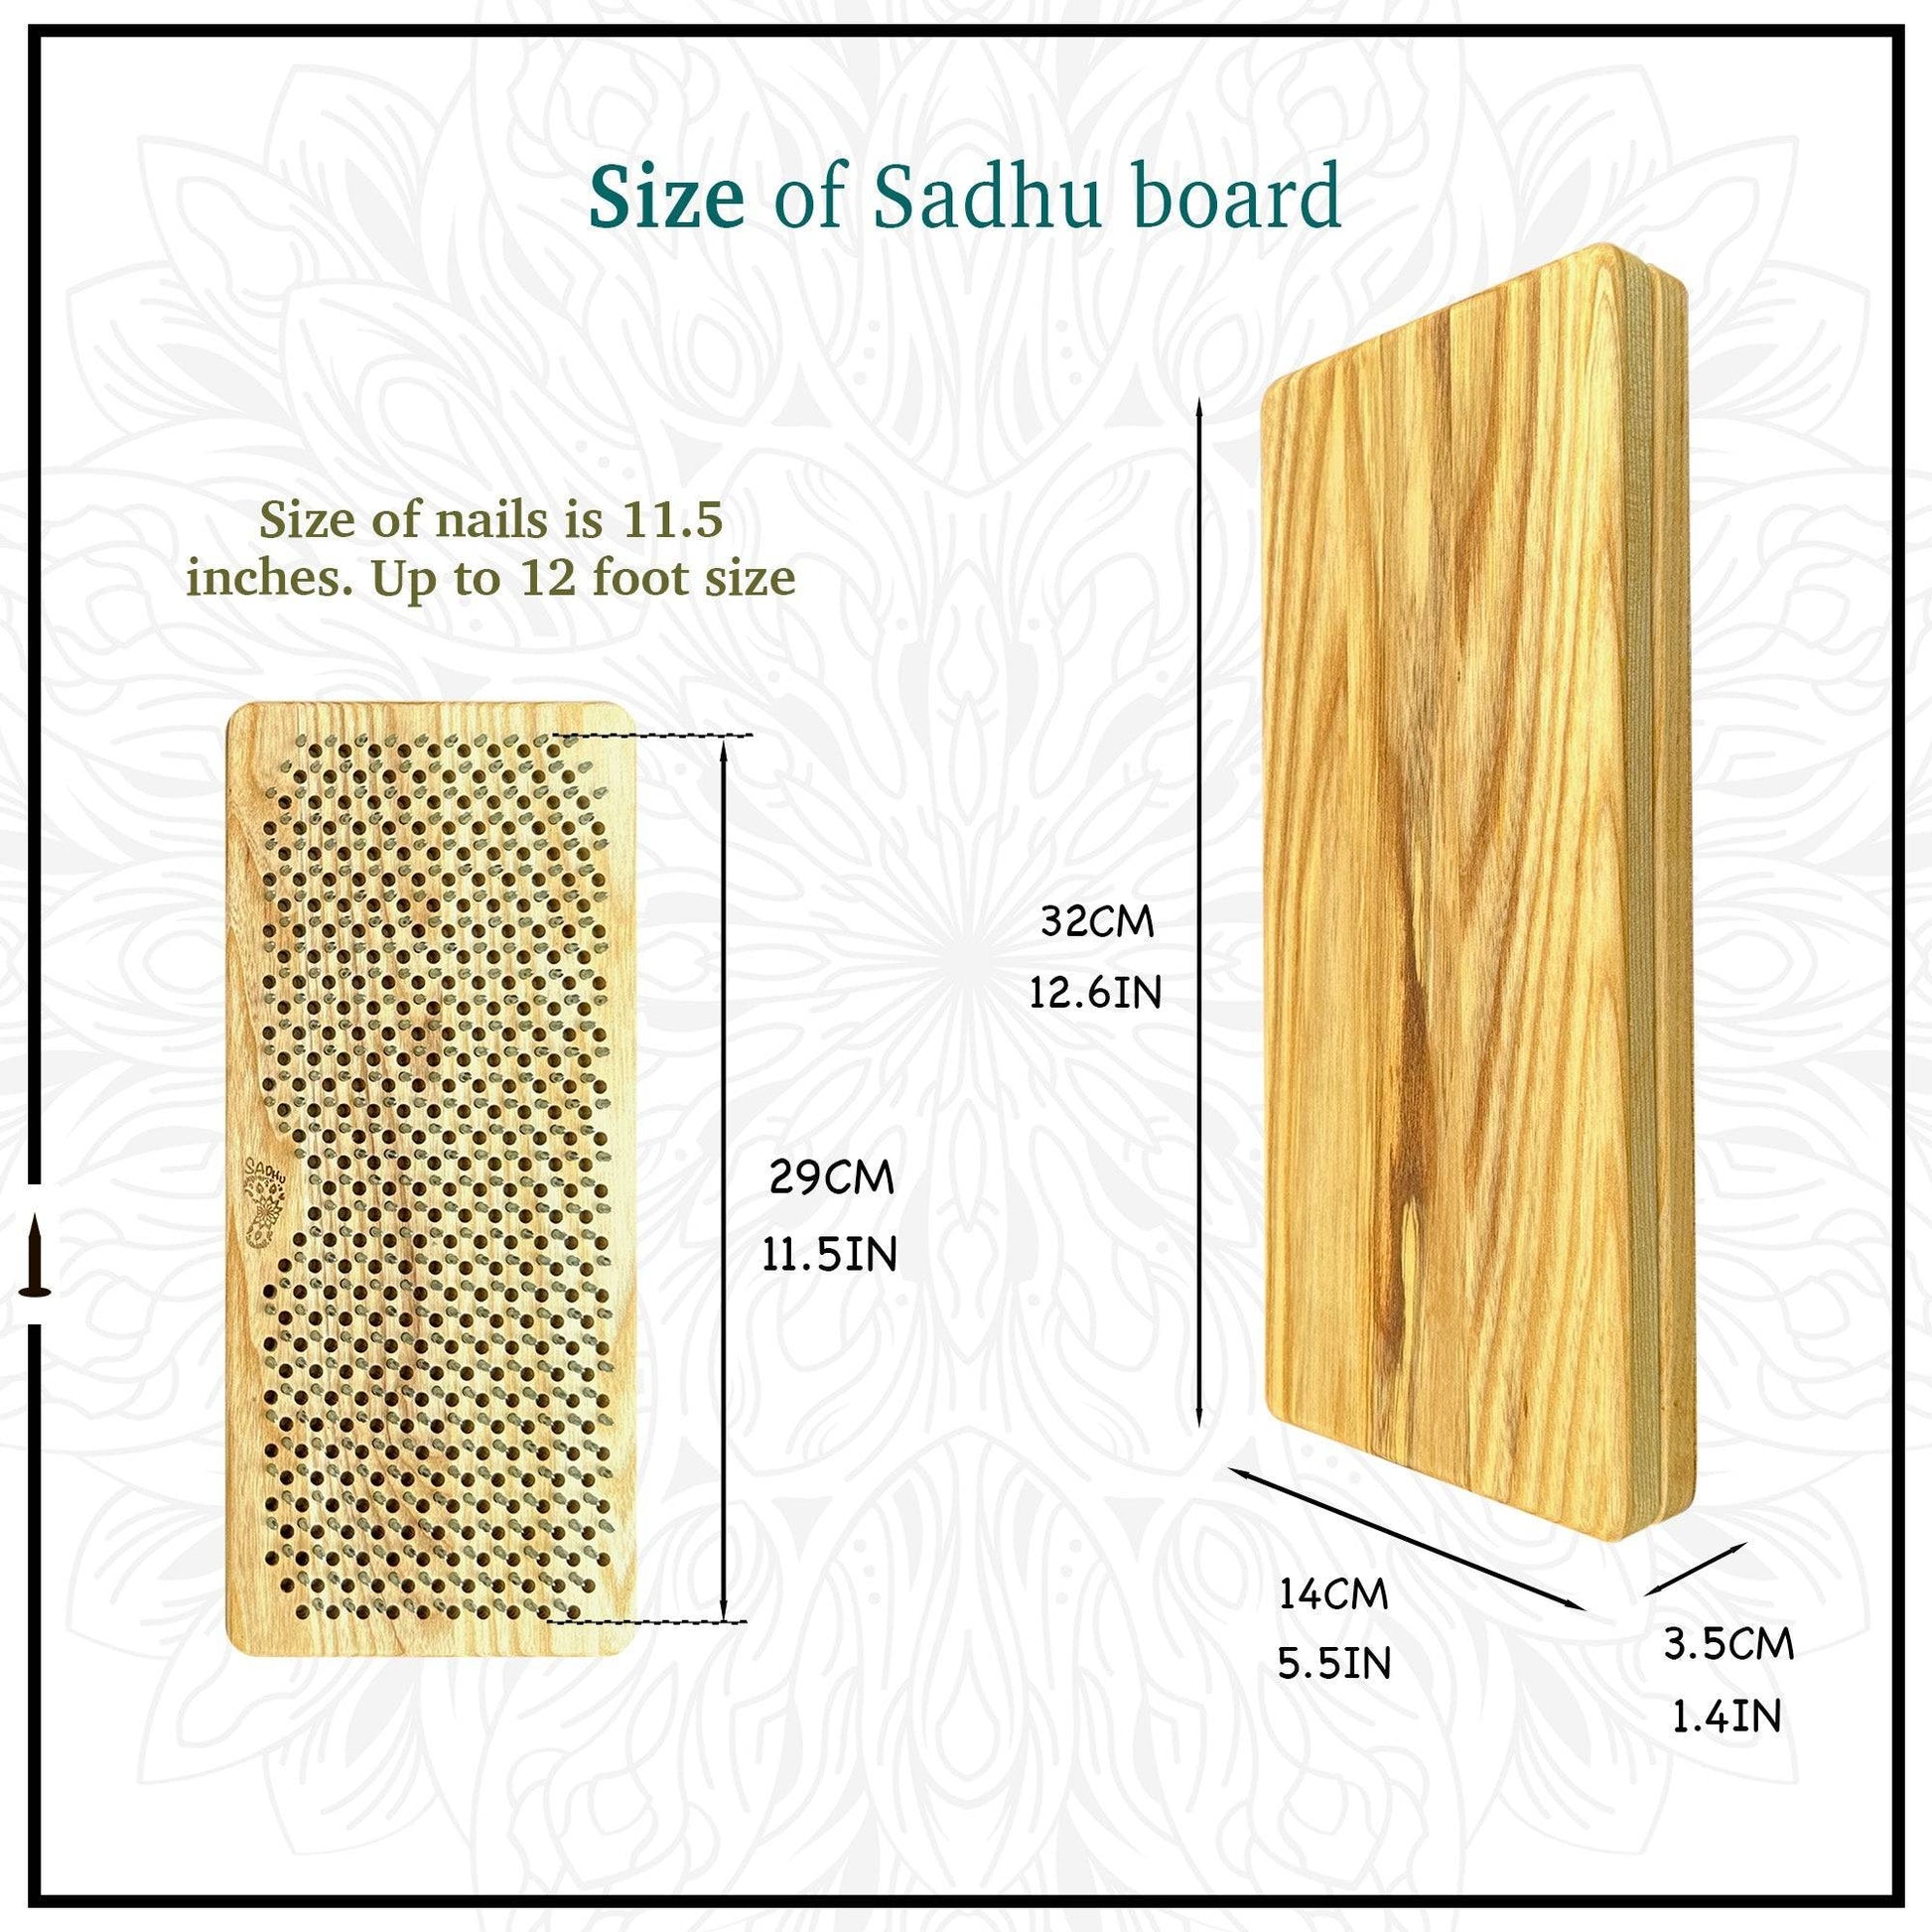 Sizes of sadhu board nails